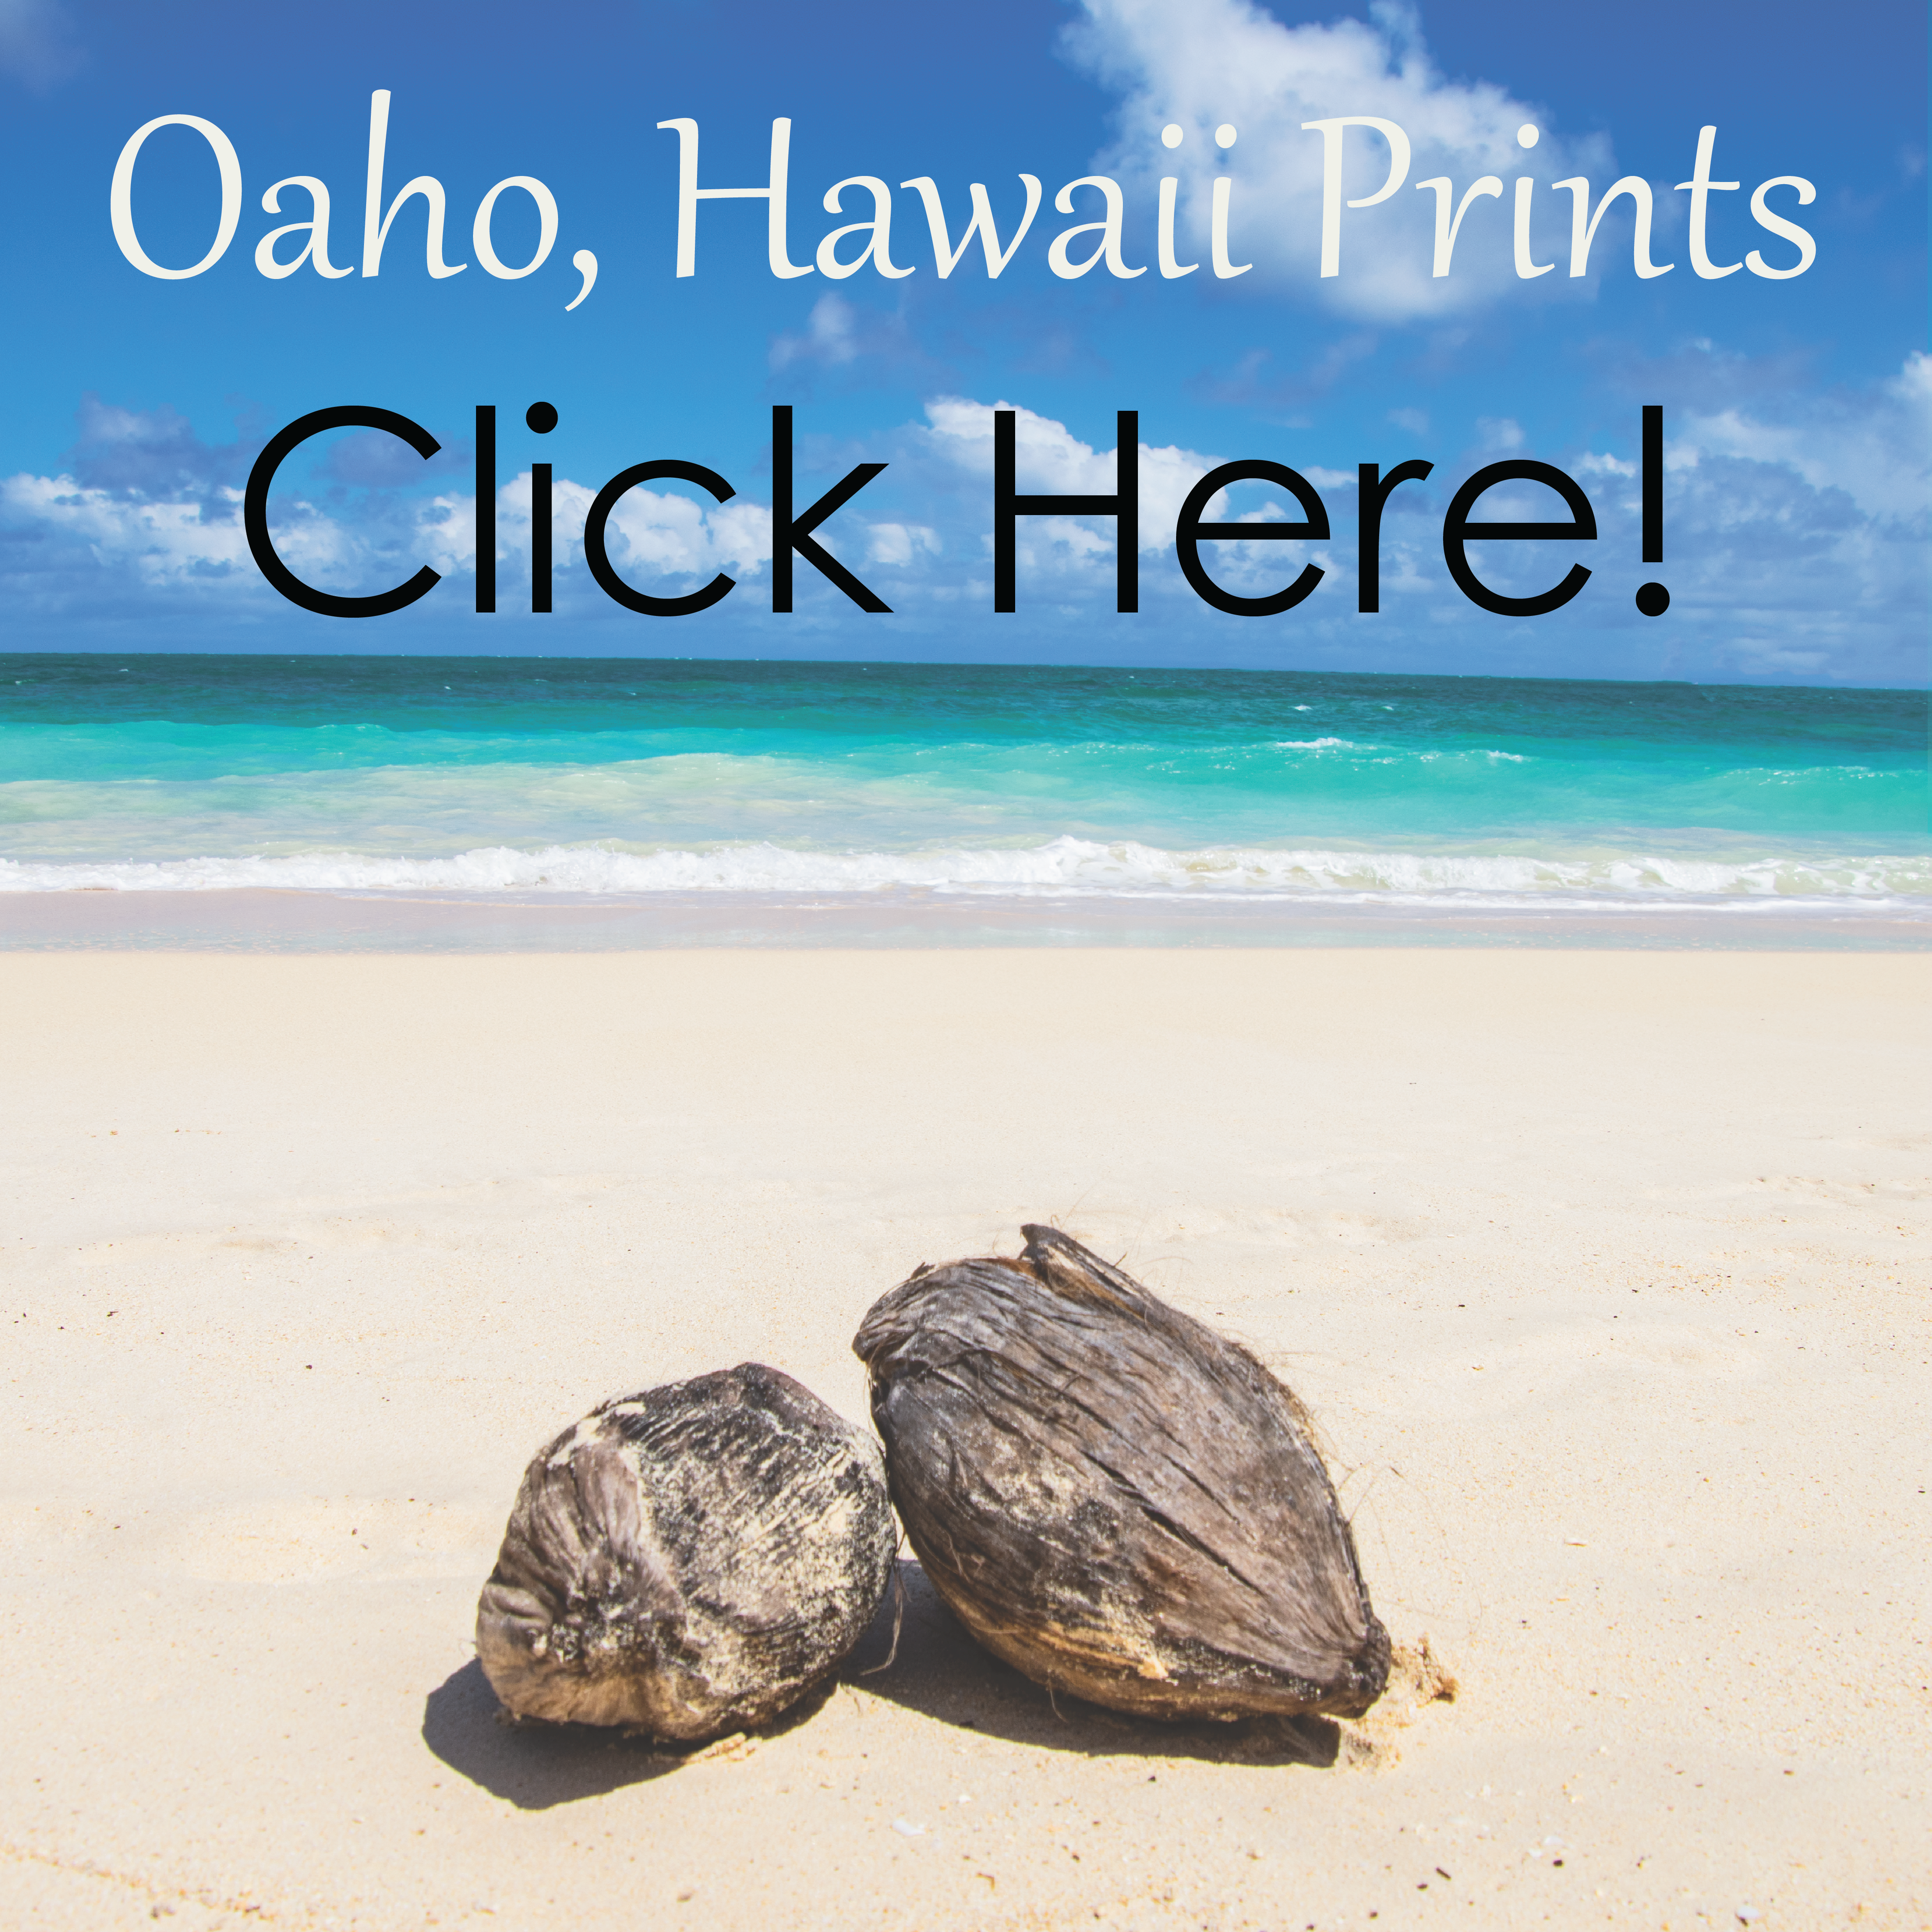 Oahu, Hawaii Prints